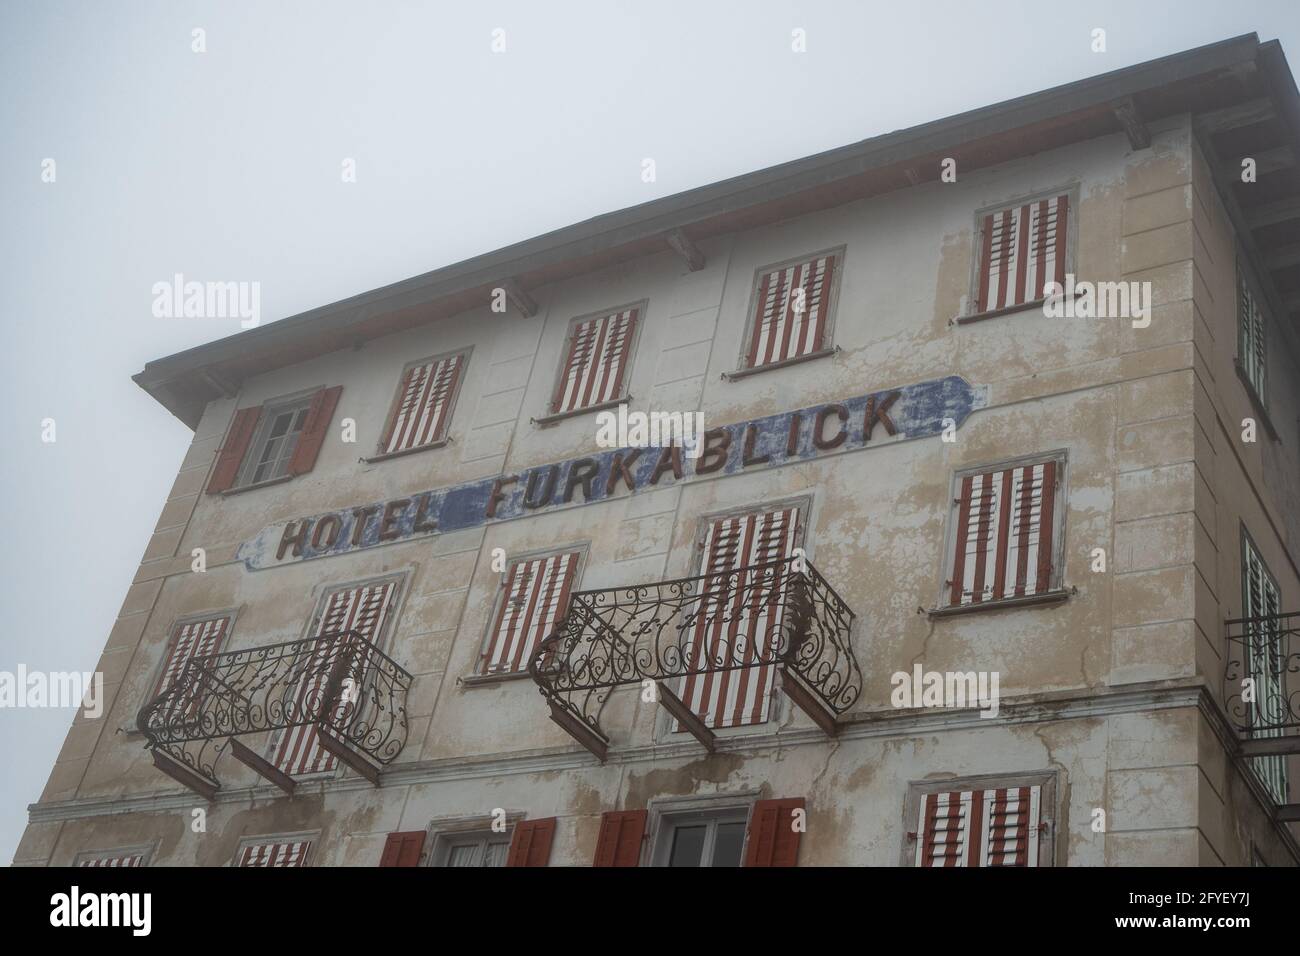 Furka pass, Switzerland - June 15th 2020: Closed hotel Furkablick in the fog Stock Photo